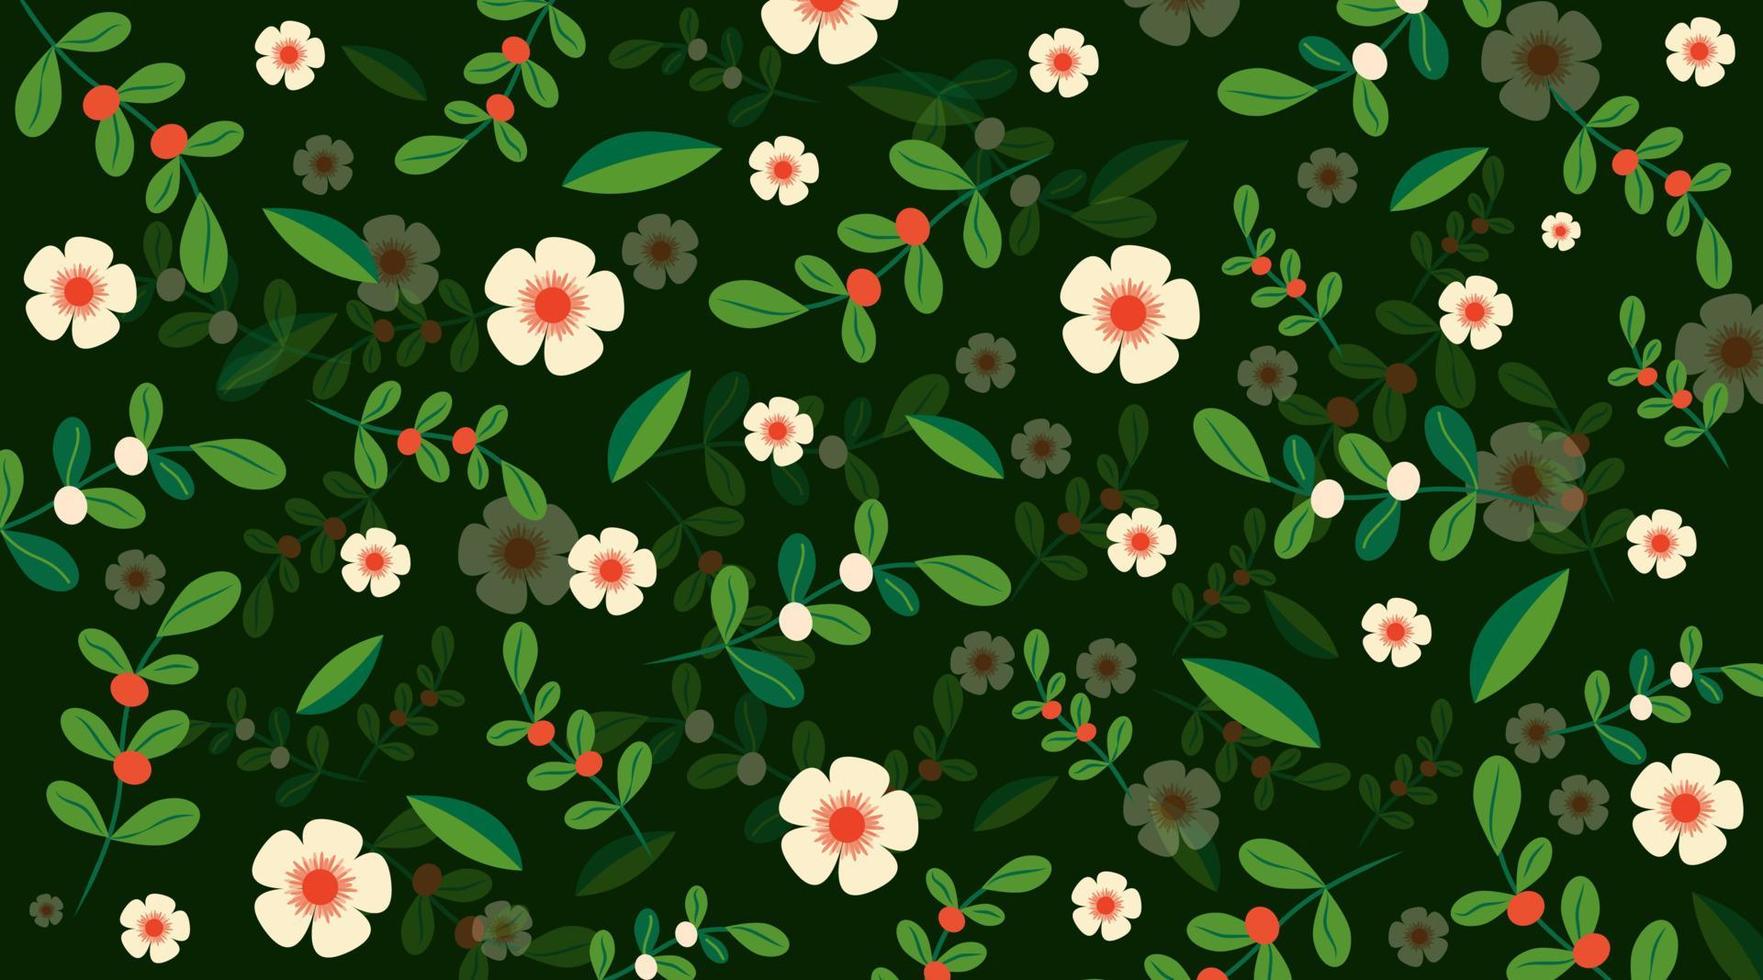 Creative floral patterns green natural background free vector illustration pattern